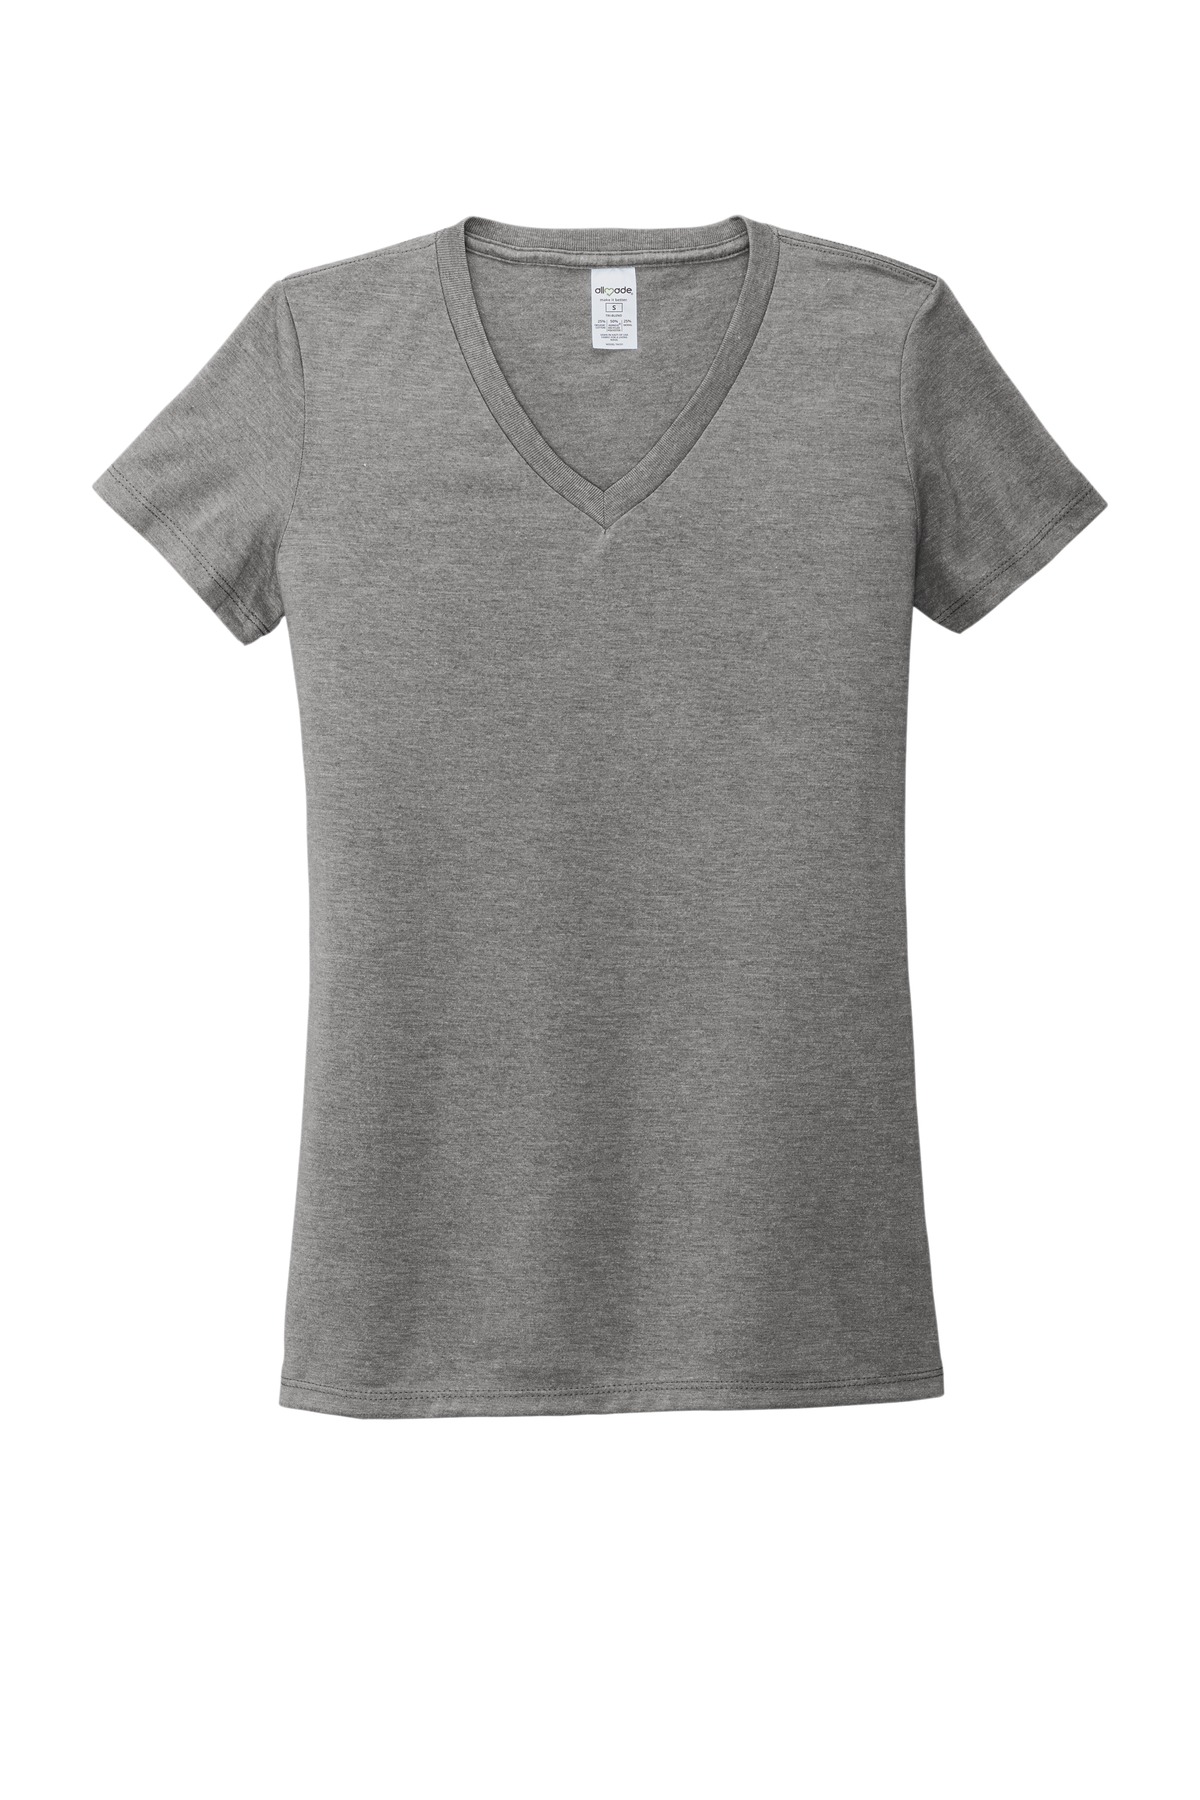 Allmade ® Women's Tri-Blend V-Neck Tee AL2018 - Custom Shirt Shop